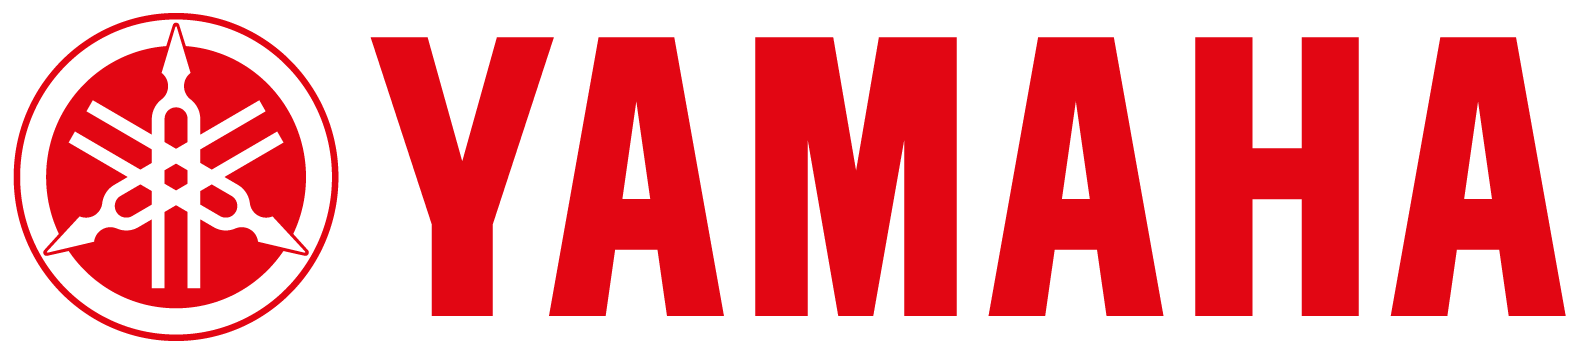 logo-yamaha-home-site-comunnica-on